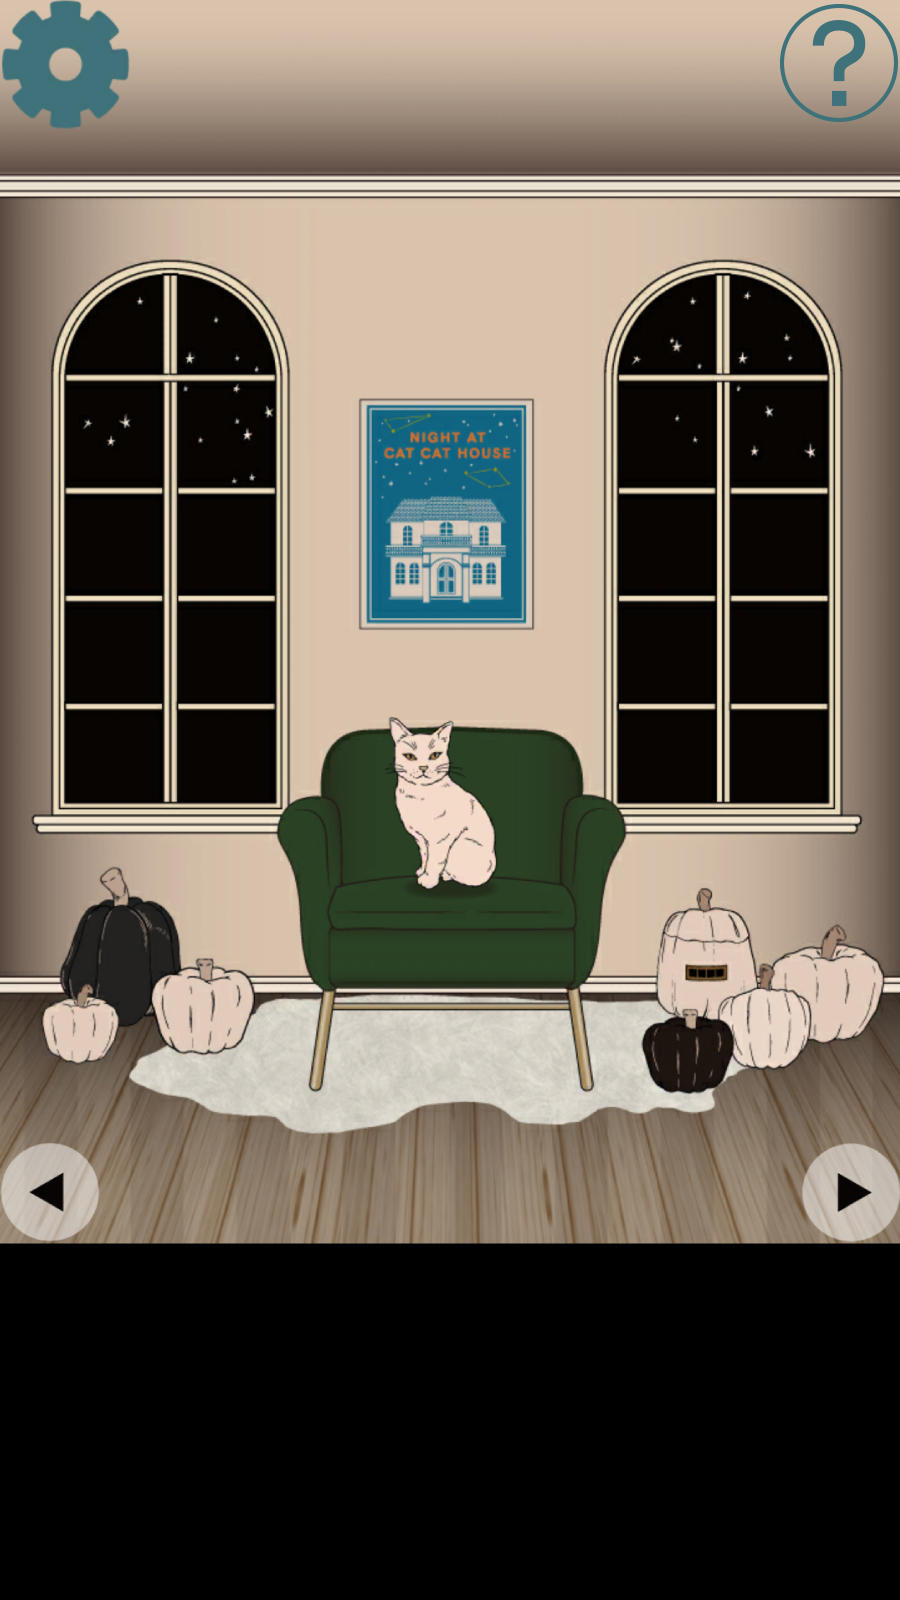 NIGHT AT CAT CAT HOUSE escape screenshot game